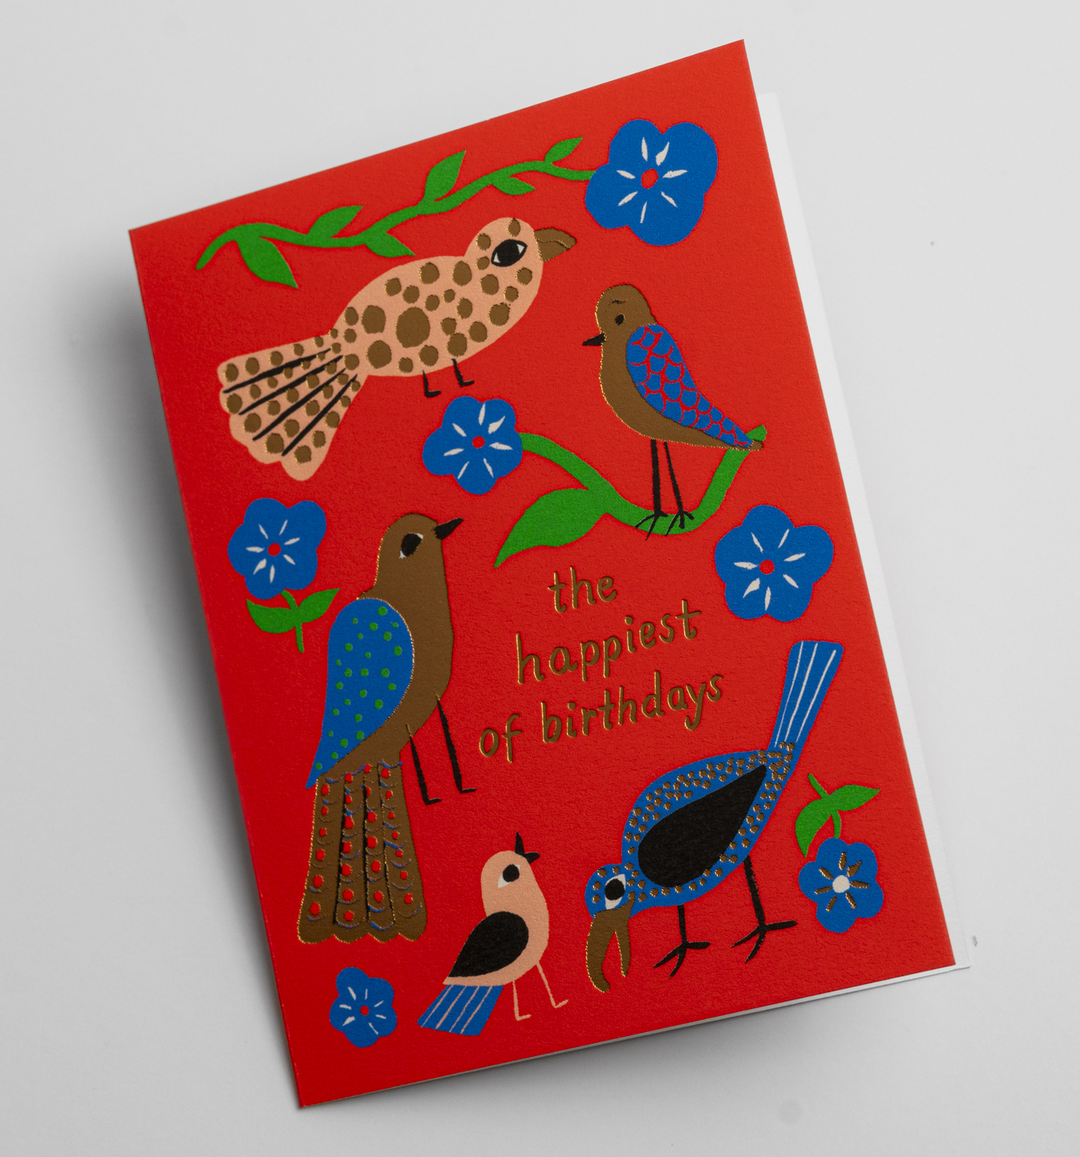 The Happiest of Birthdays Illustrated Birds Mini Card